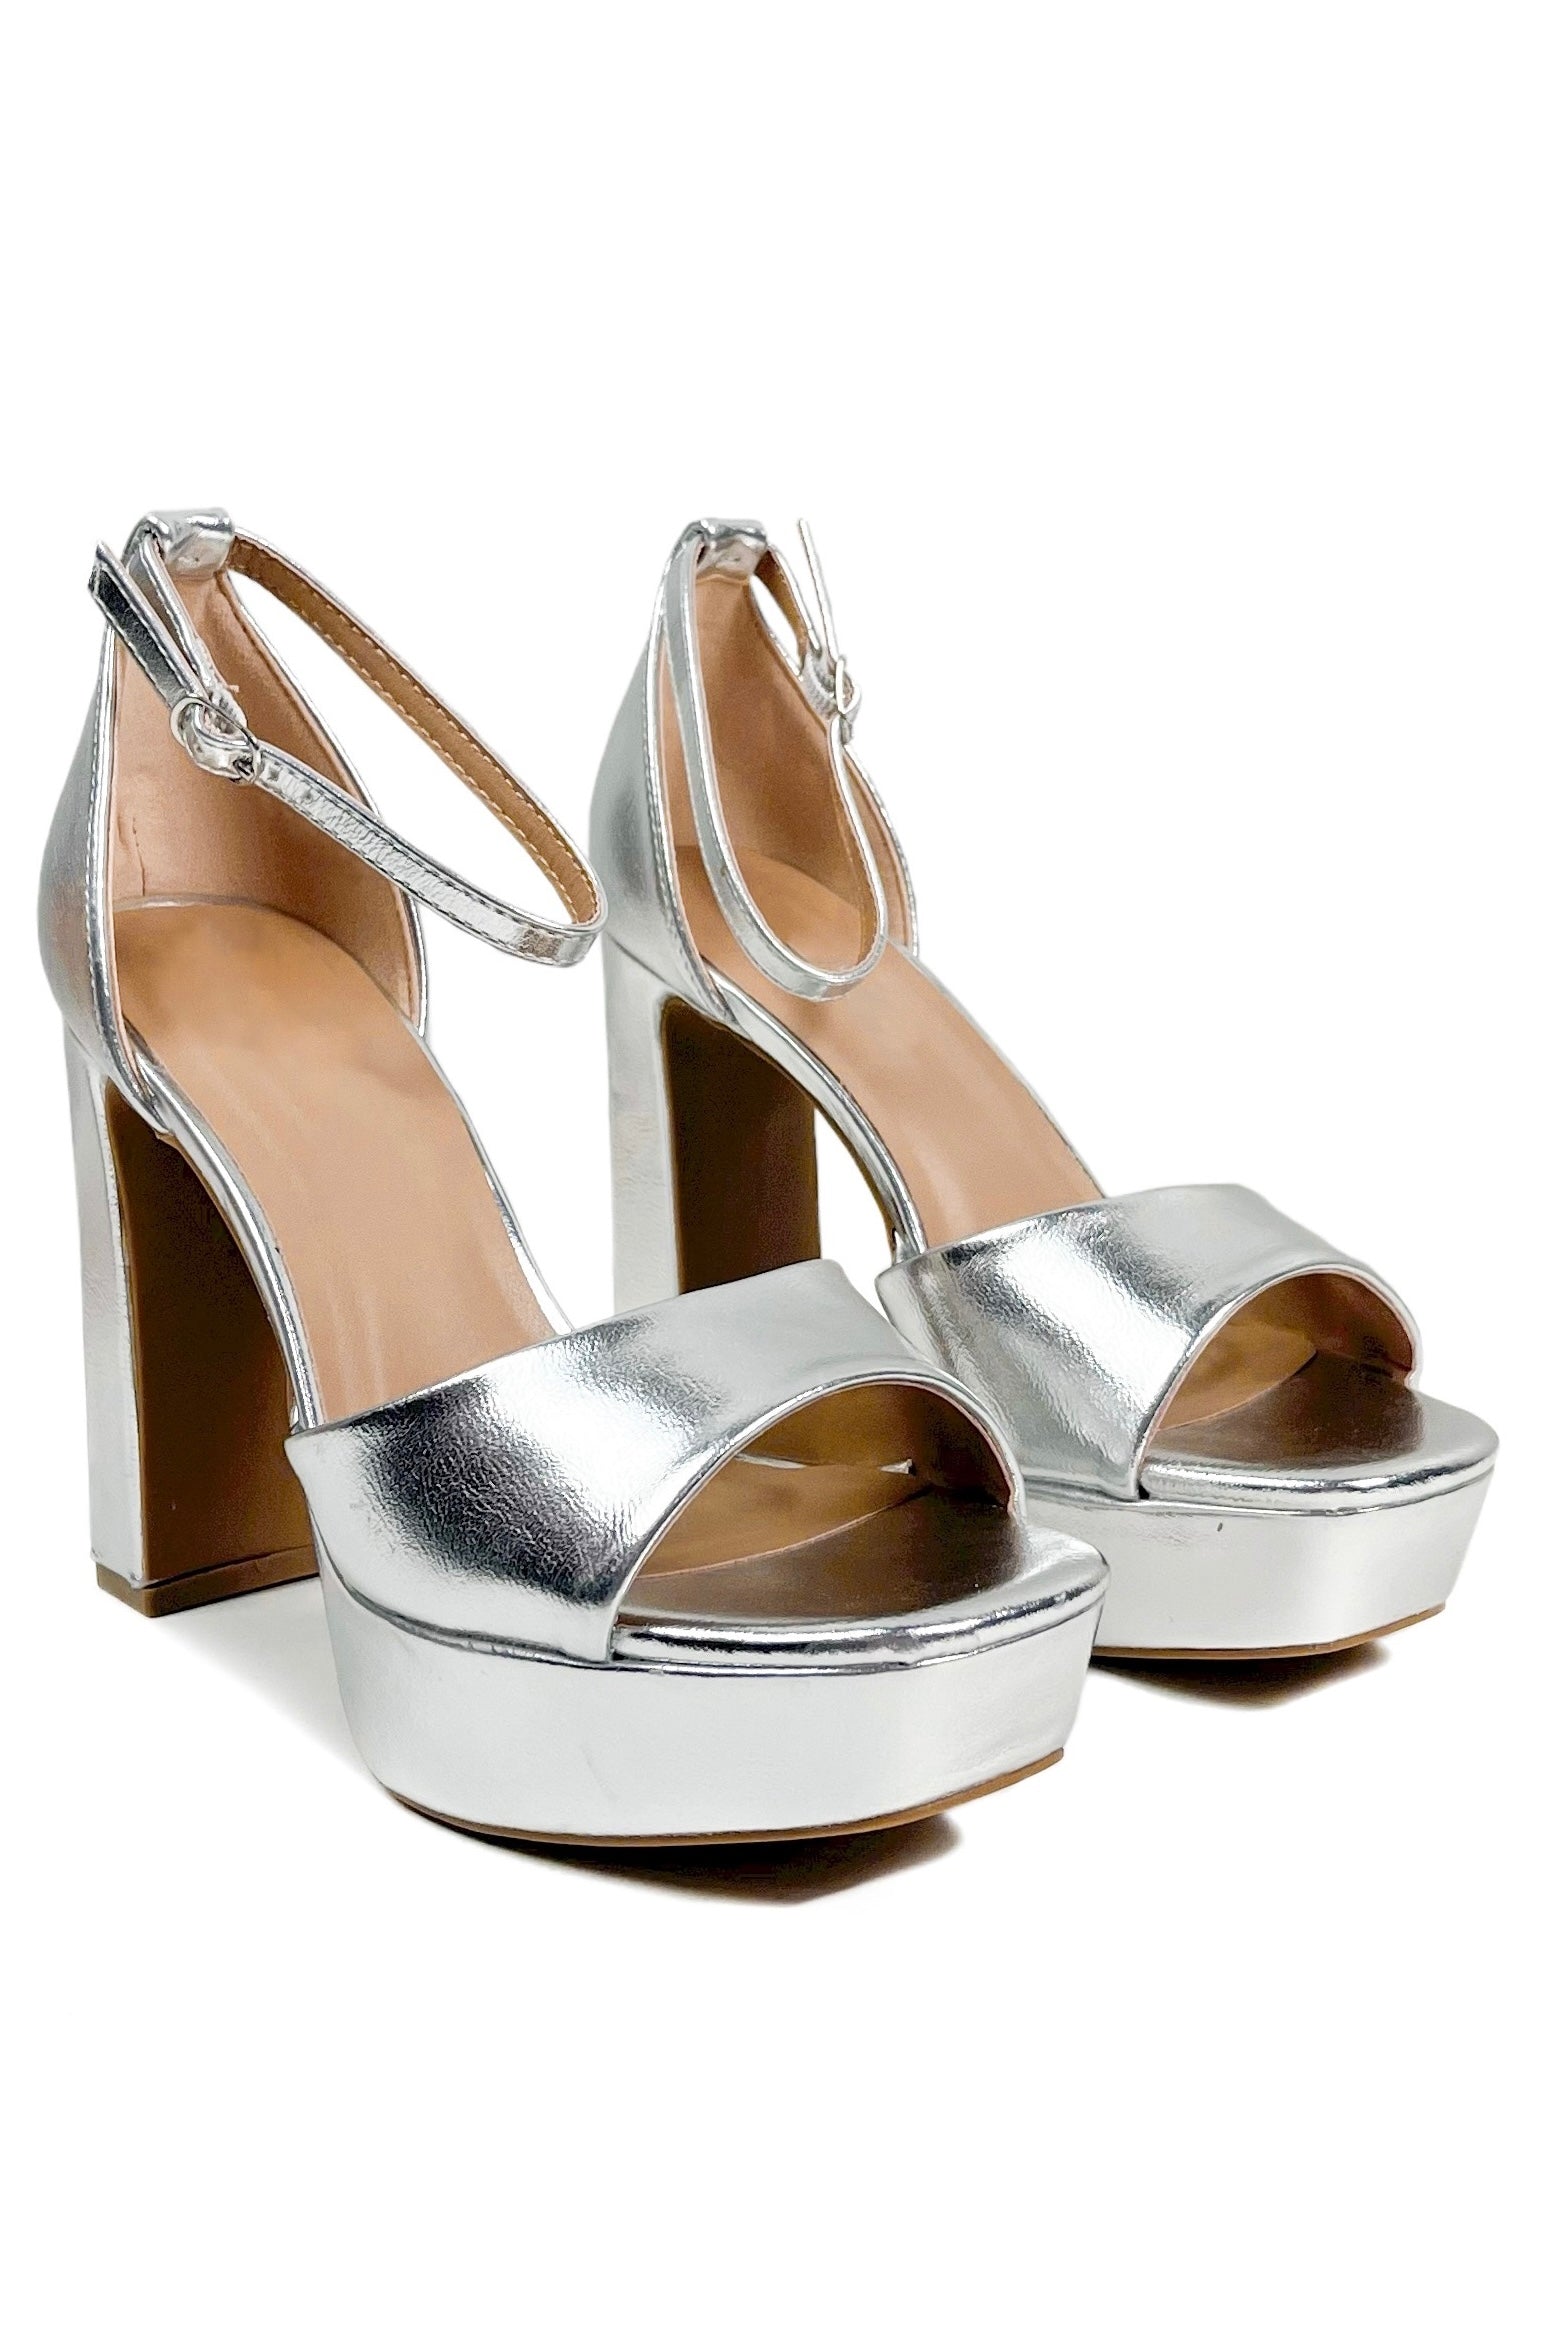 VALENTINO GARAVANI: Tan-Go Platform Pumps in laminated patent leather -  Silver | Valentino Garavani high heel shoes 3W2S0DQ3SSH online at GIGLIO.COM